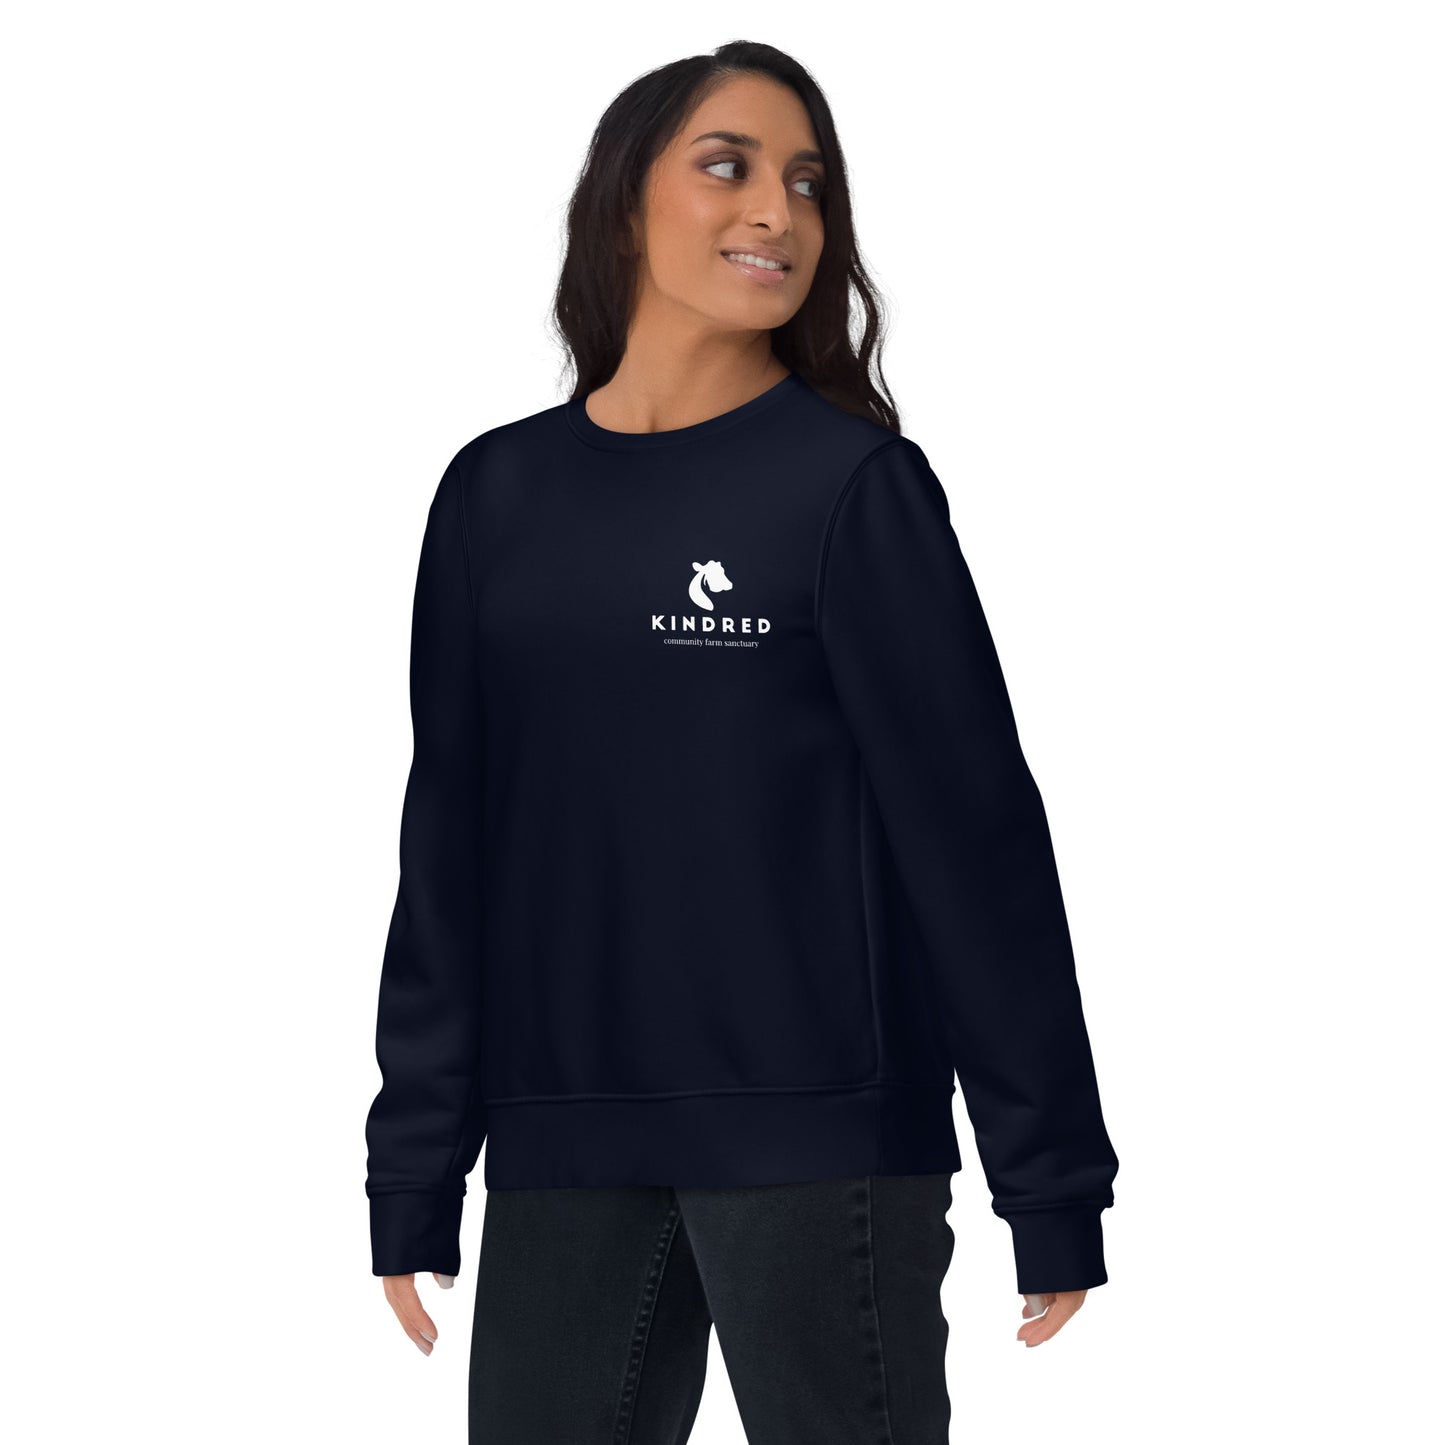 Unisex Vegan Eco Sweatshirt - Donates $15